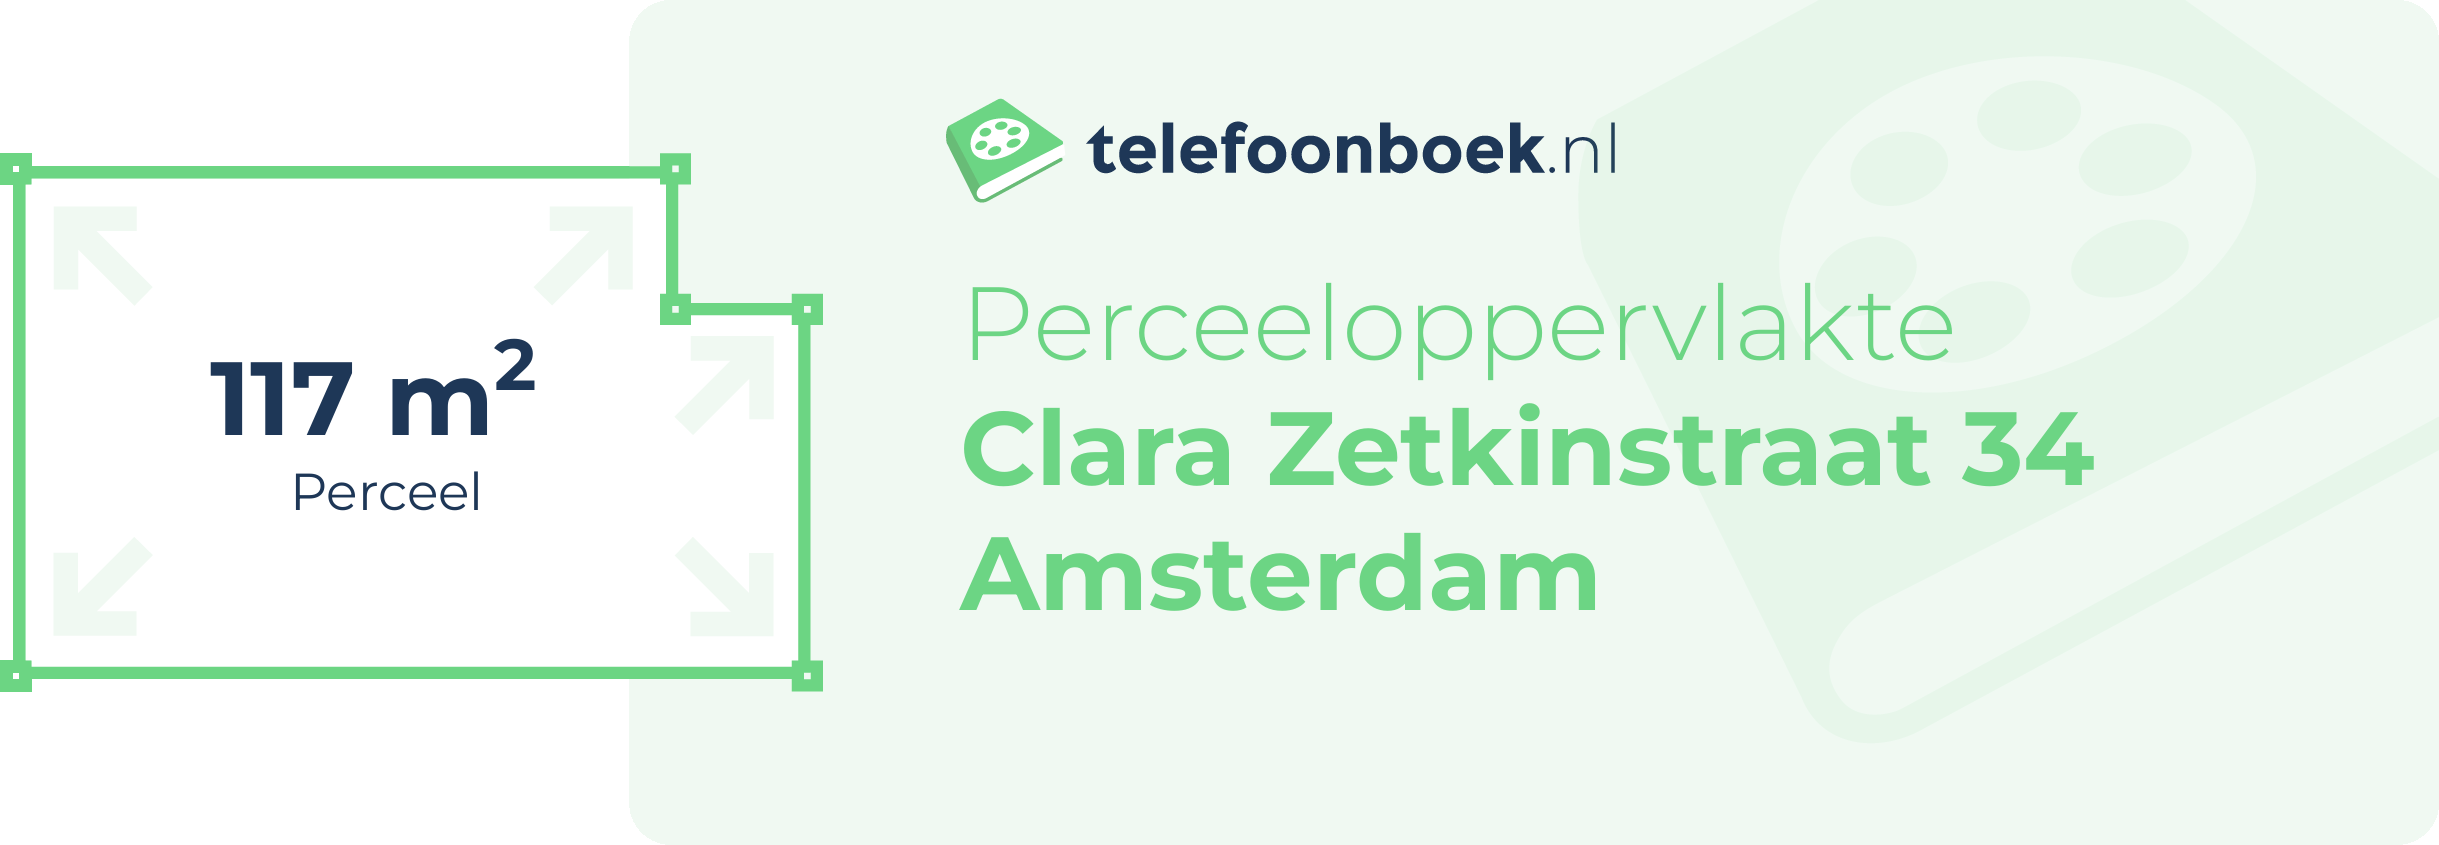 Perceeloppervlakte Clara Zetkinstraat 34 Amsterdam